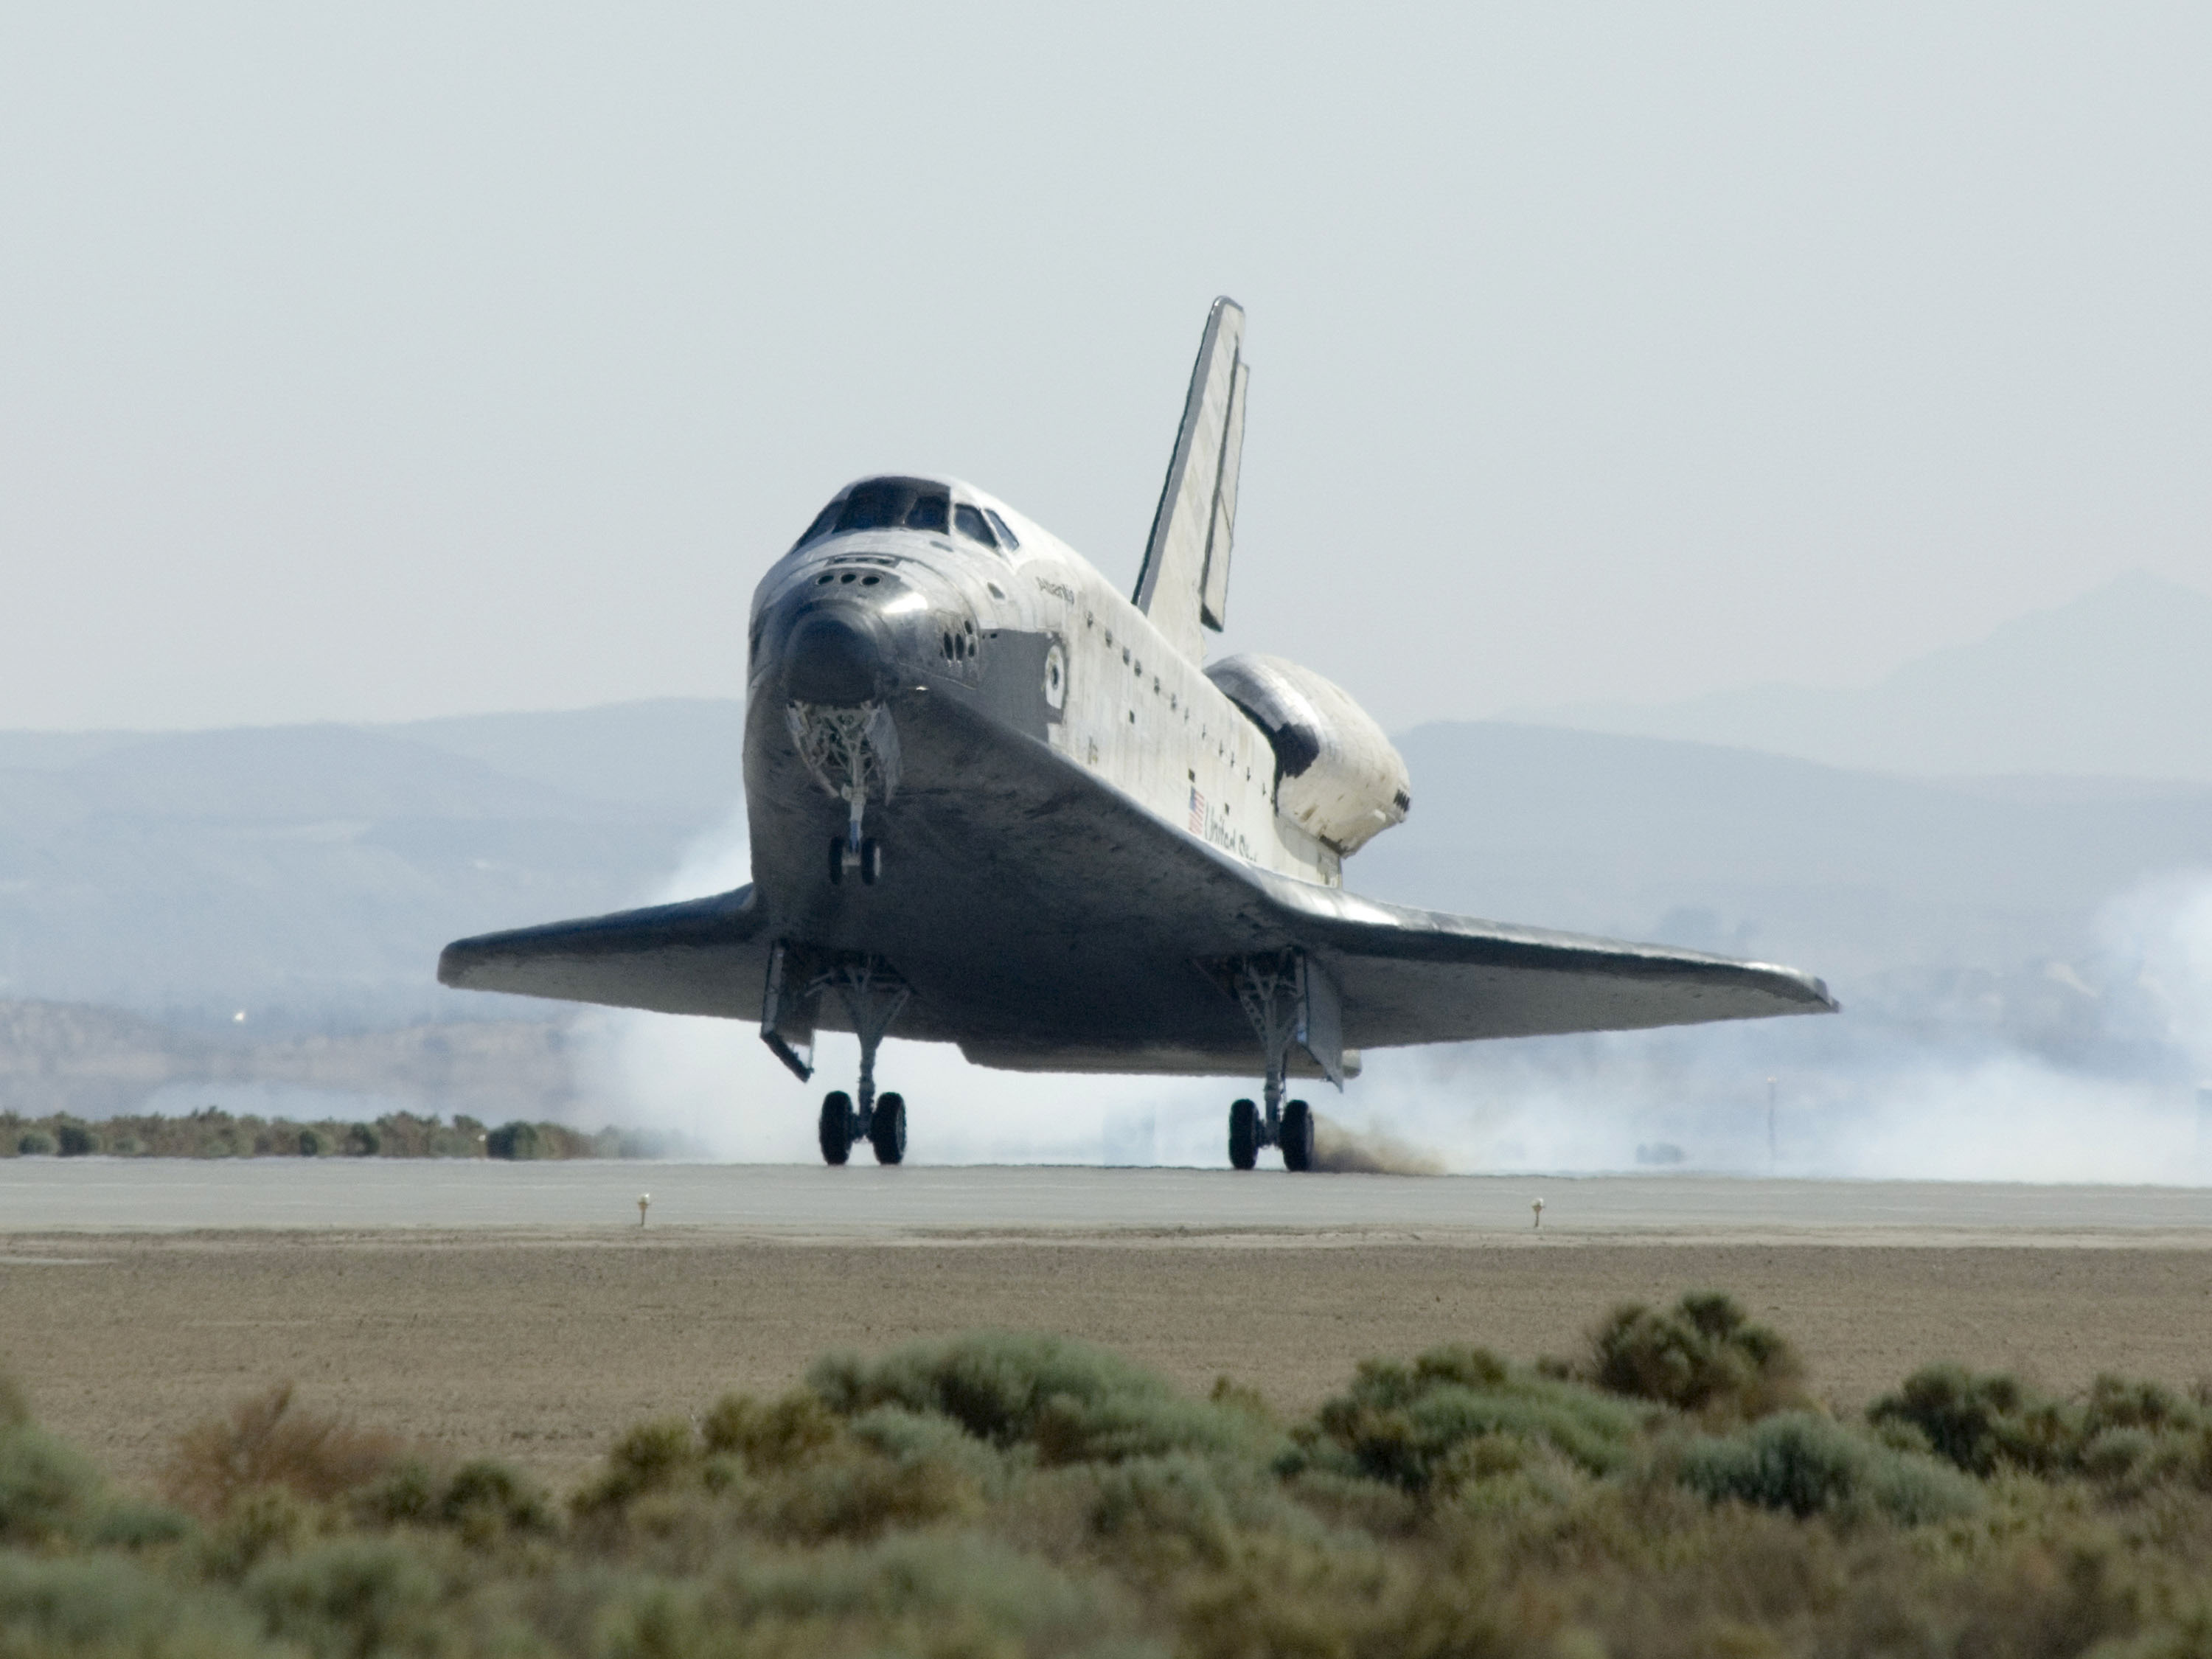 The Shuttle landing - the back wheels touching down.